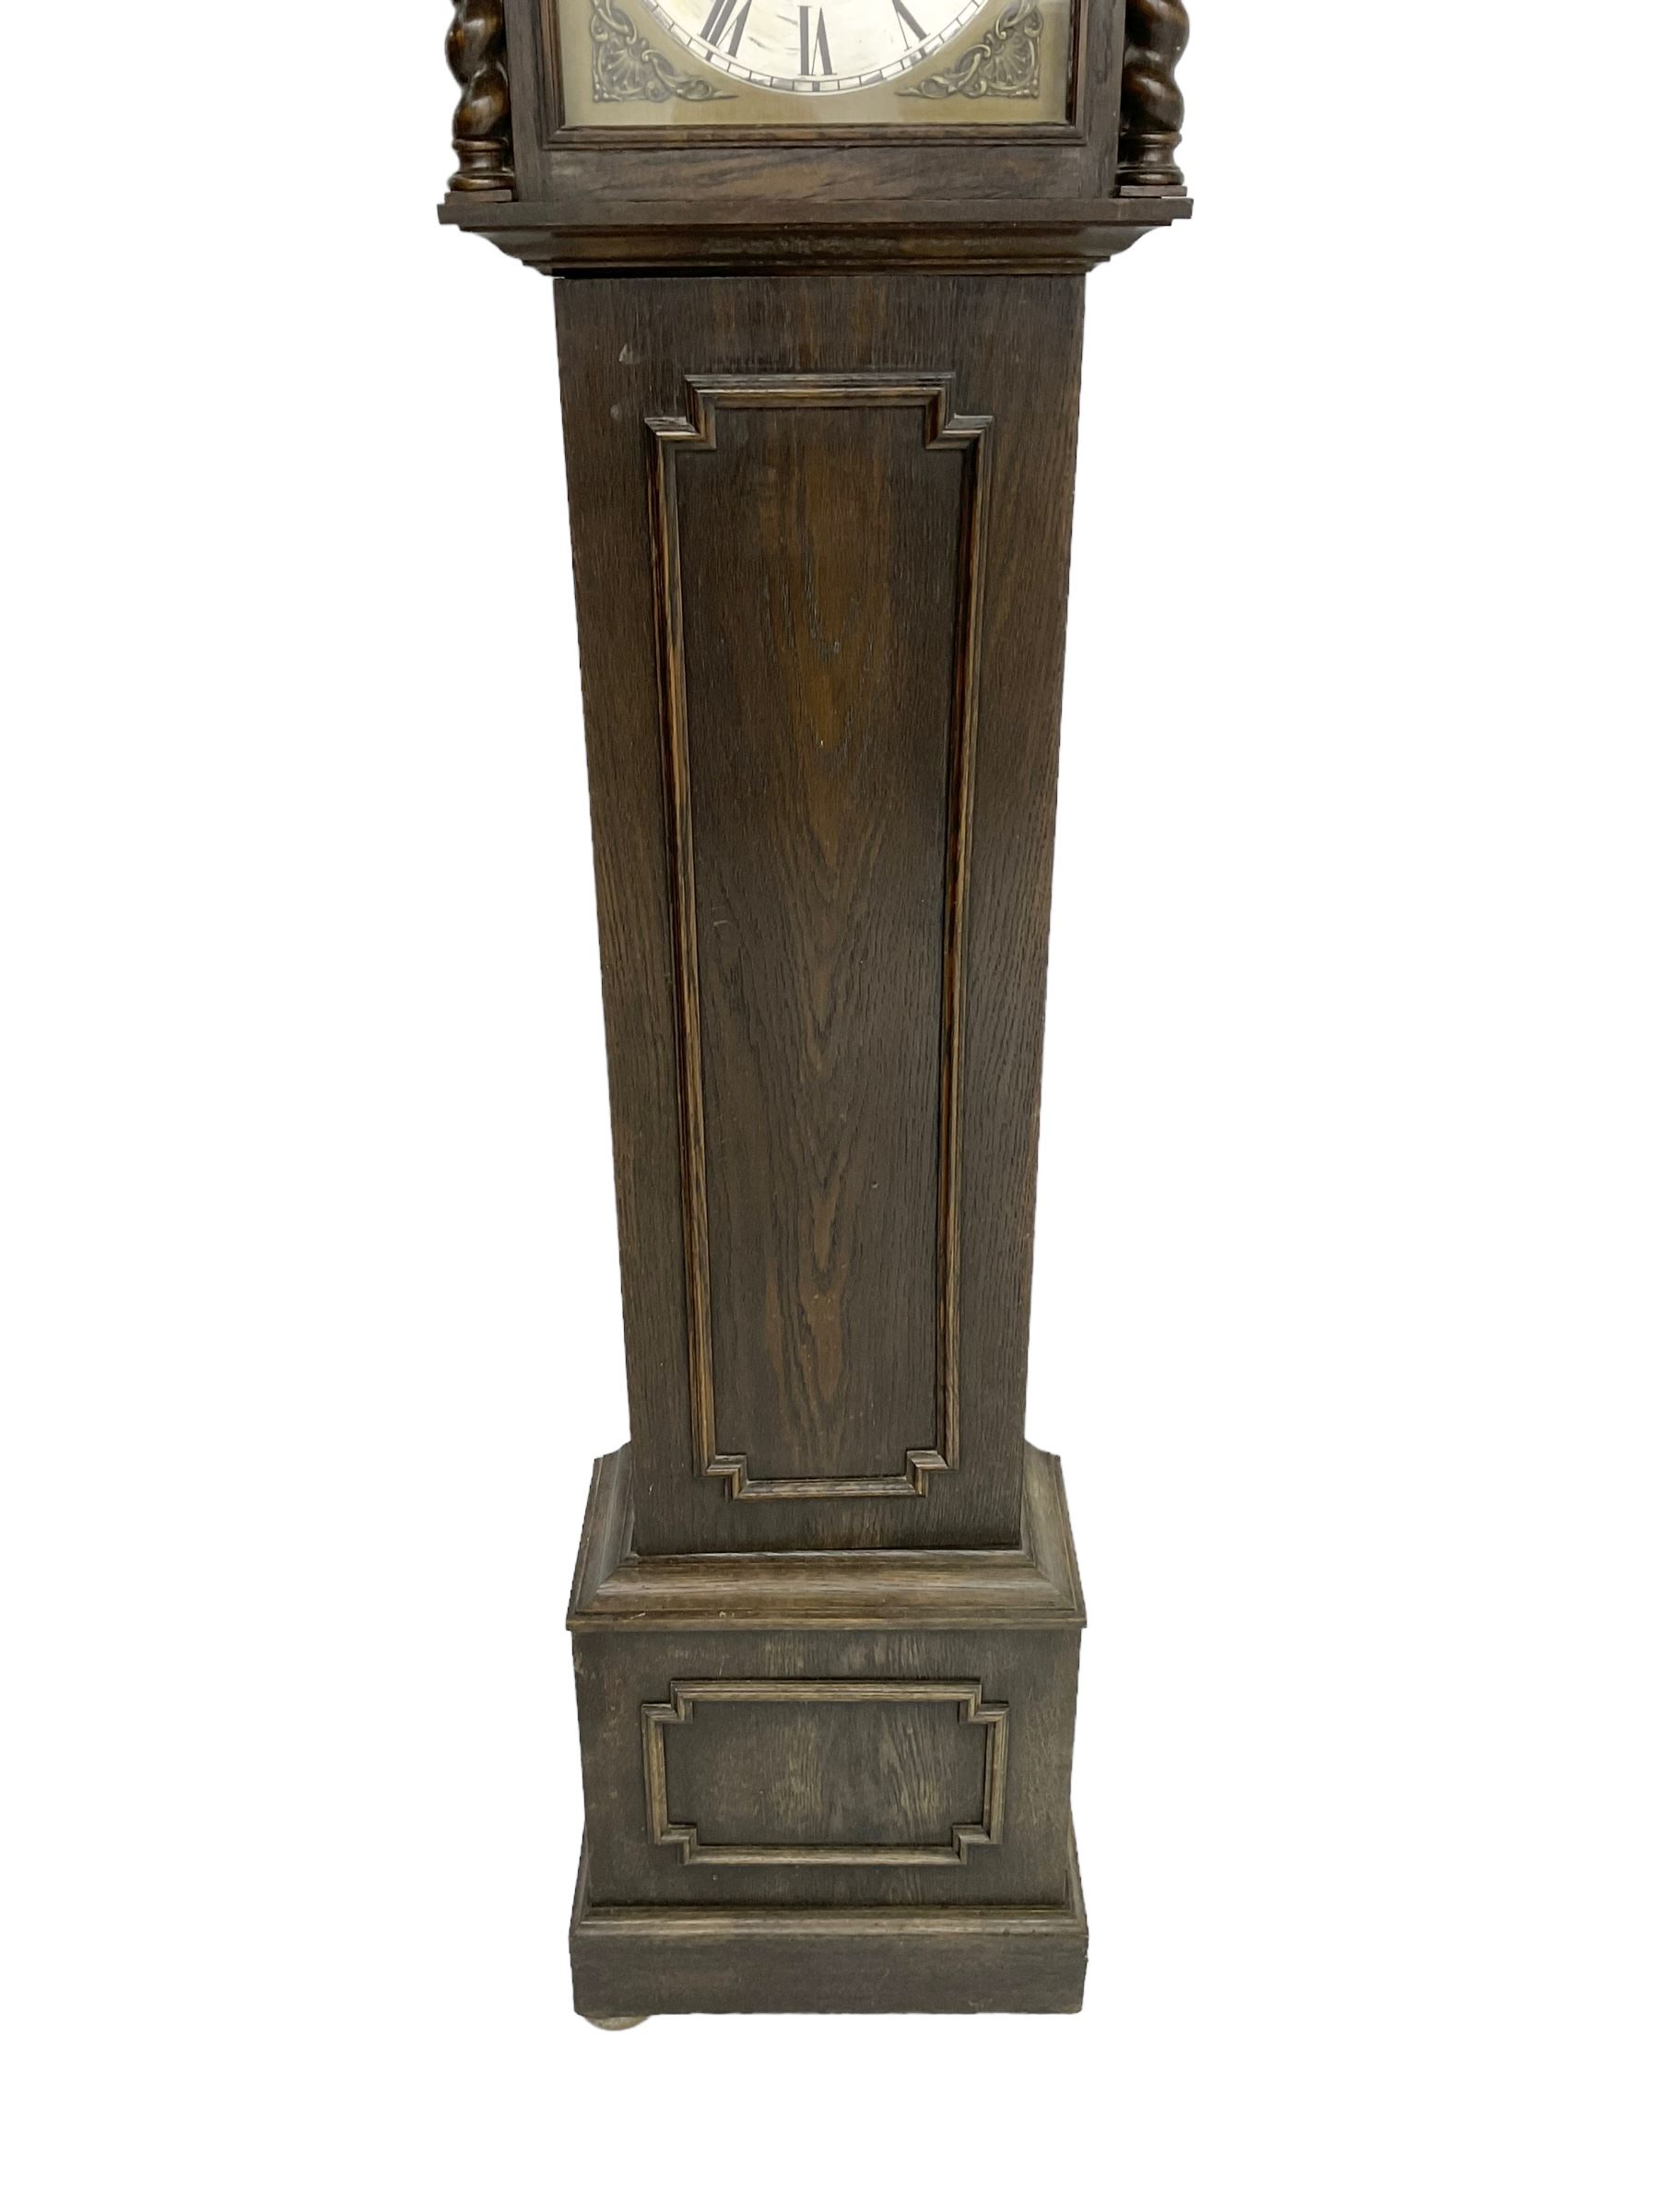 Early 20th century German oak cased 8-day longcase clock - Image 3 of 6